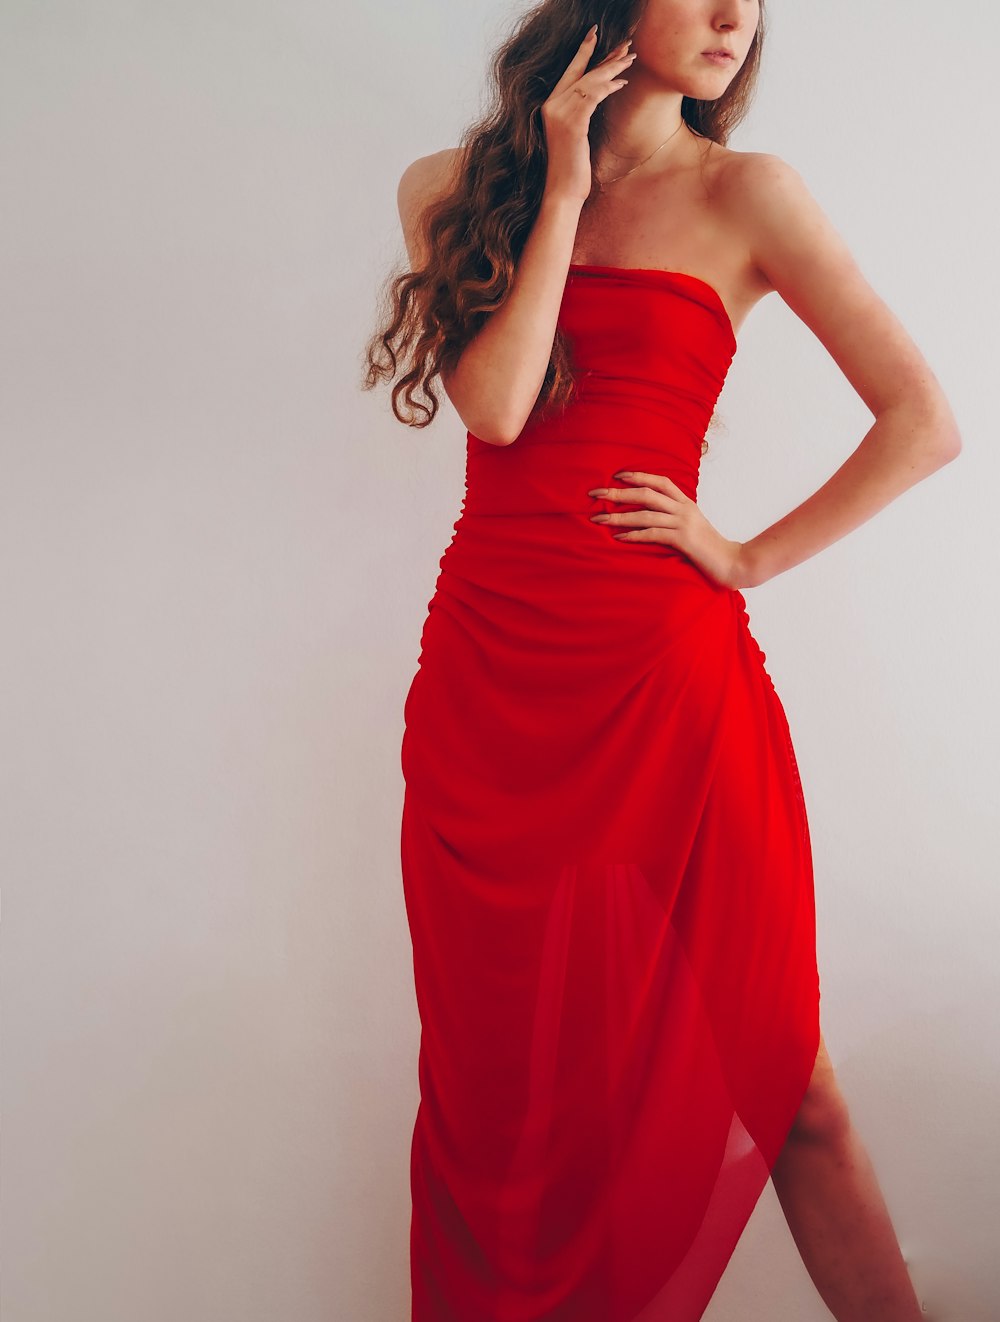 Woman in red tube dress photo – Frankreich on Unsplash